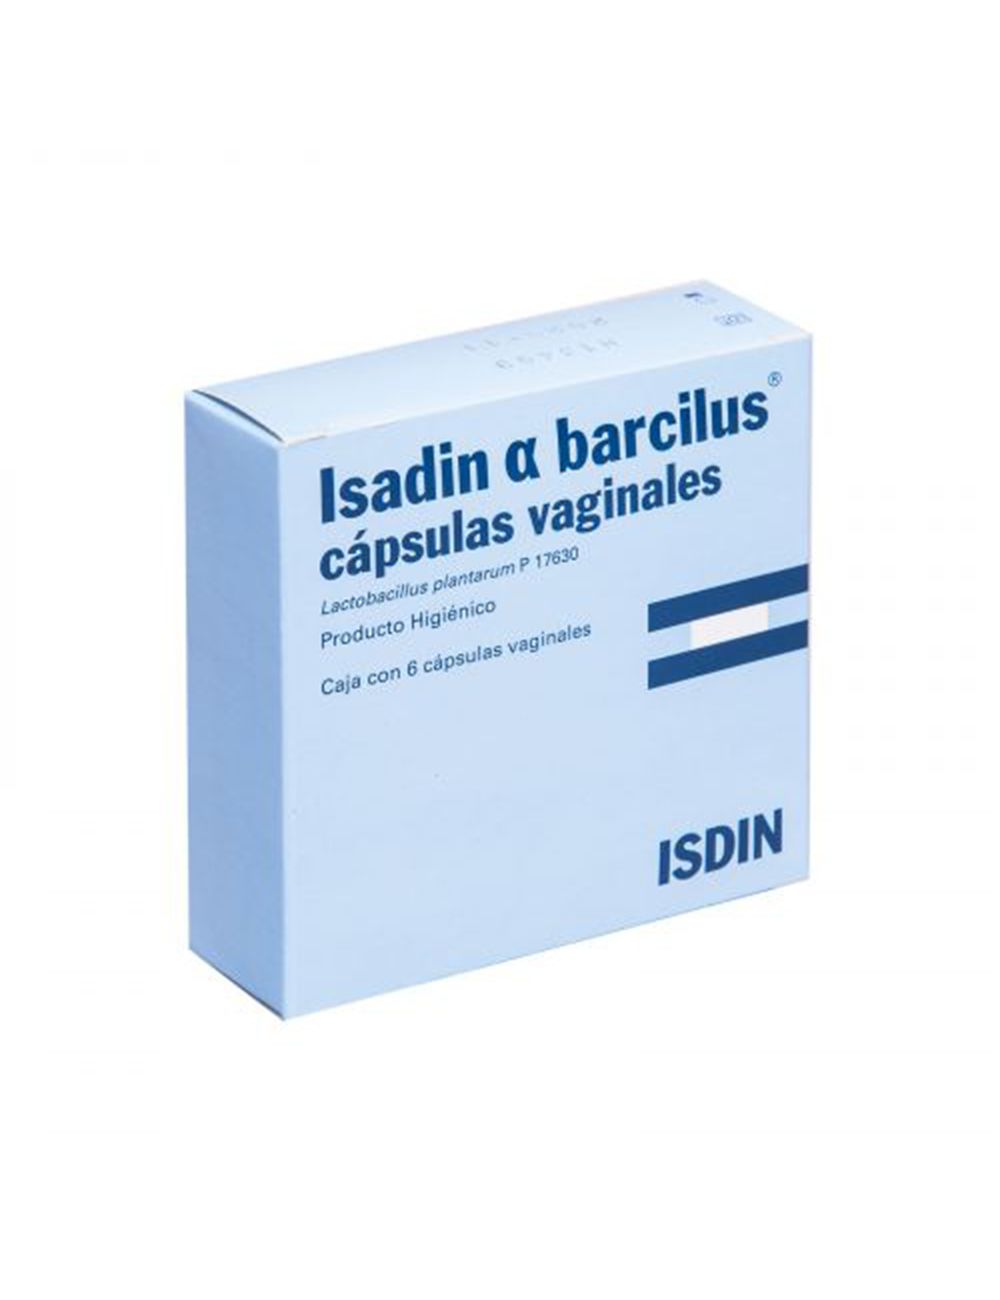 ISDIN ISADIN A BARCILUS CAPSULAS VAGINALES 6/C | The Glow Shop